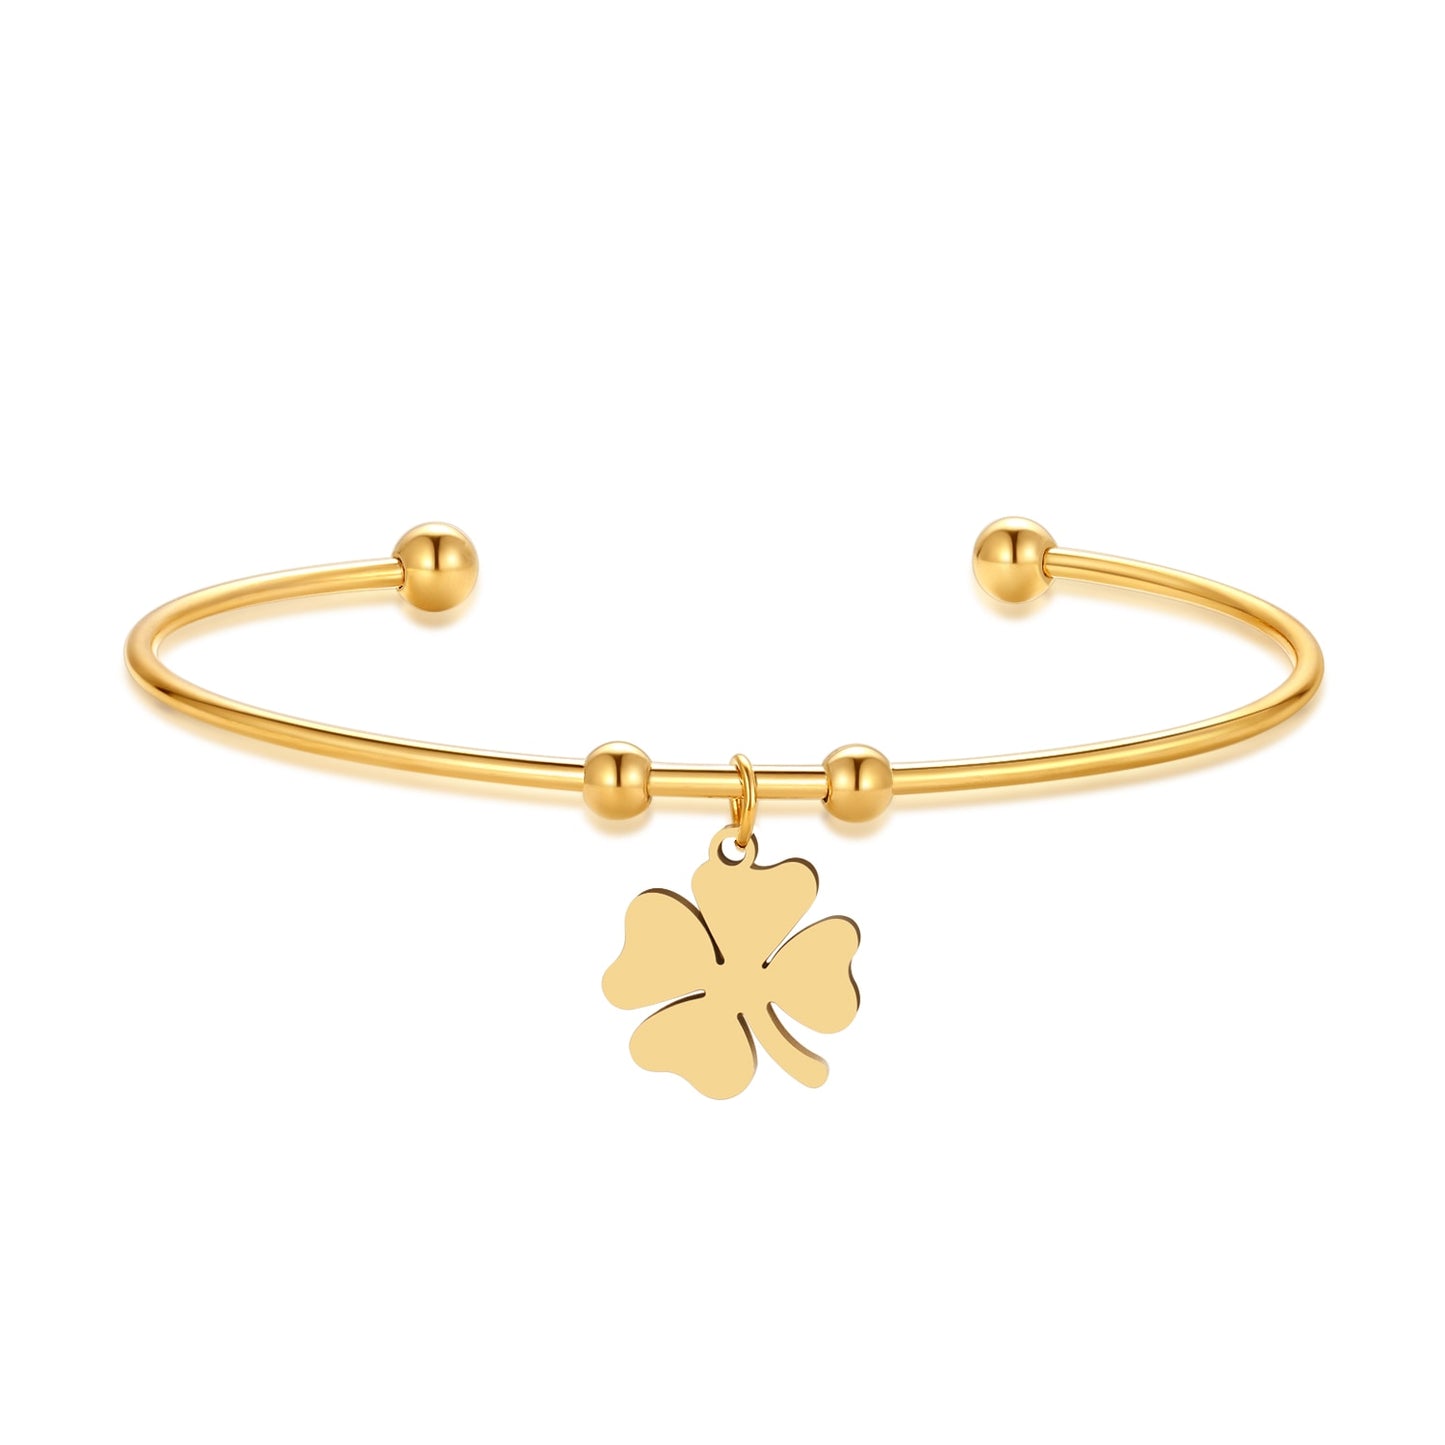 Stainless Steel Open Bracelet, Gold Color Clover Simple Trendy Bracelets For Women